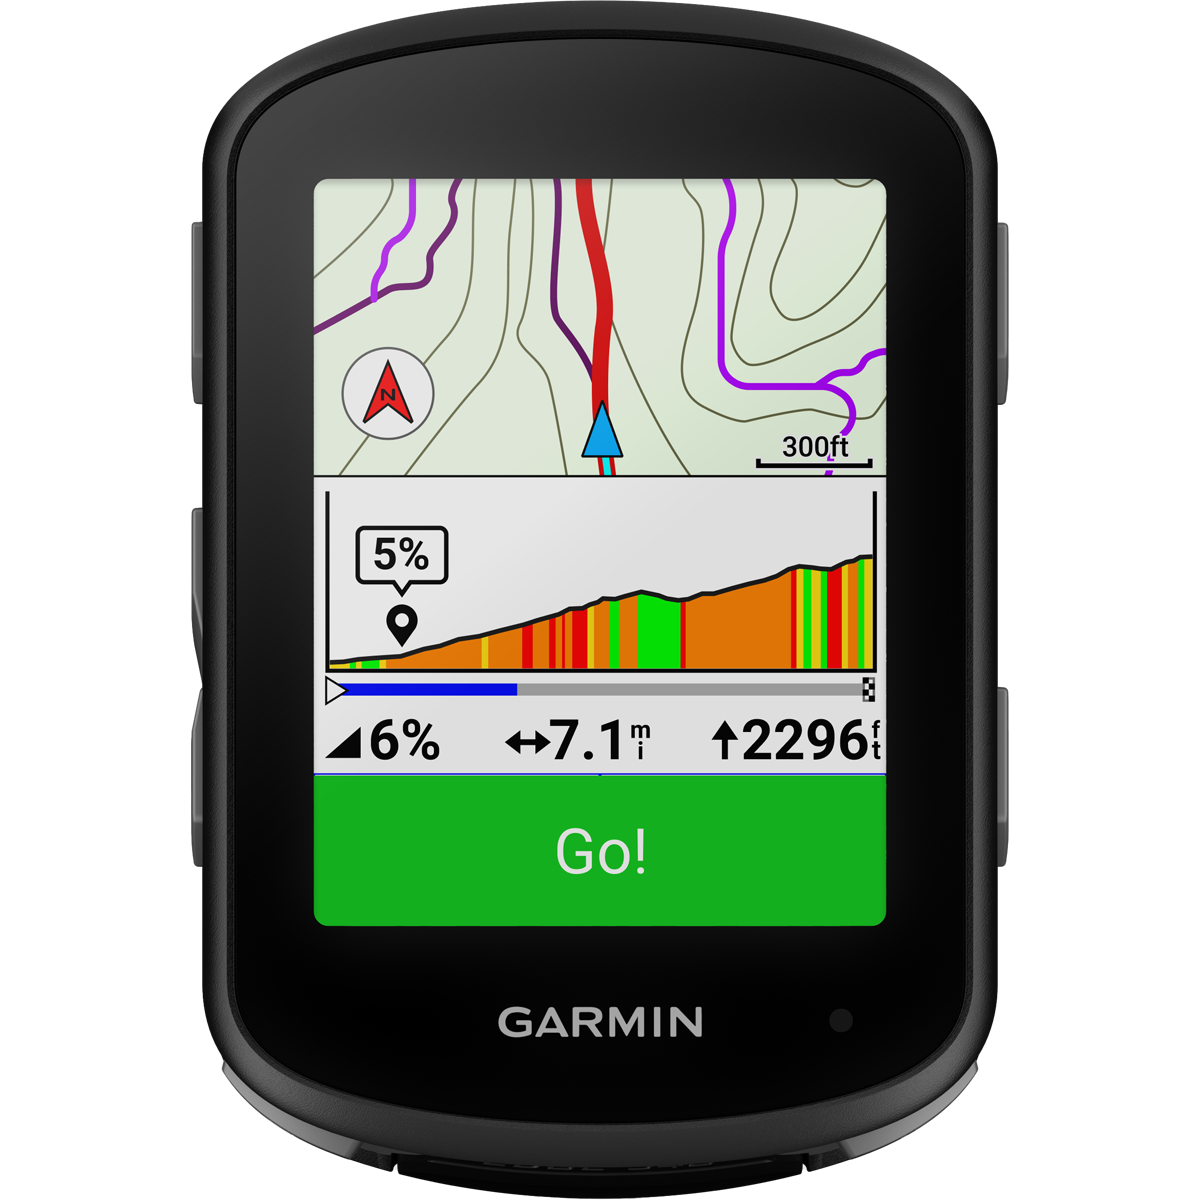 Garmin Edge 830 review: Cycling sweet spot